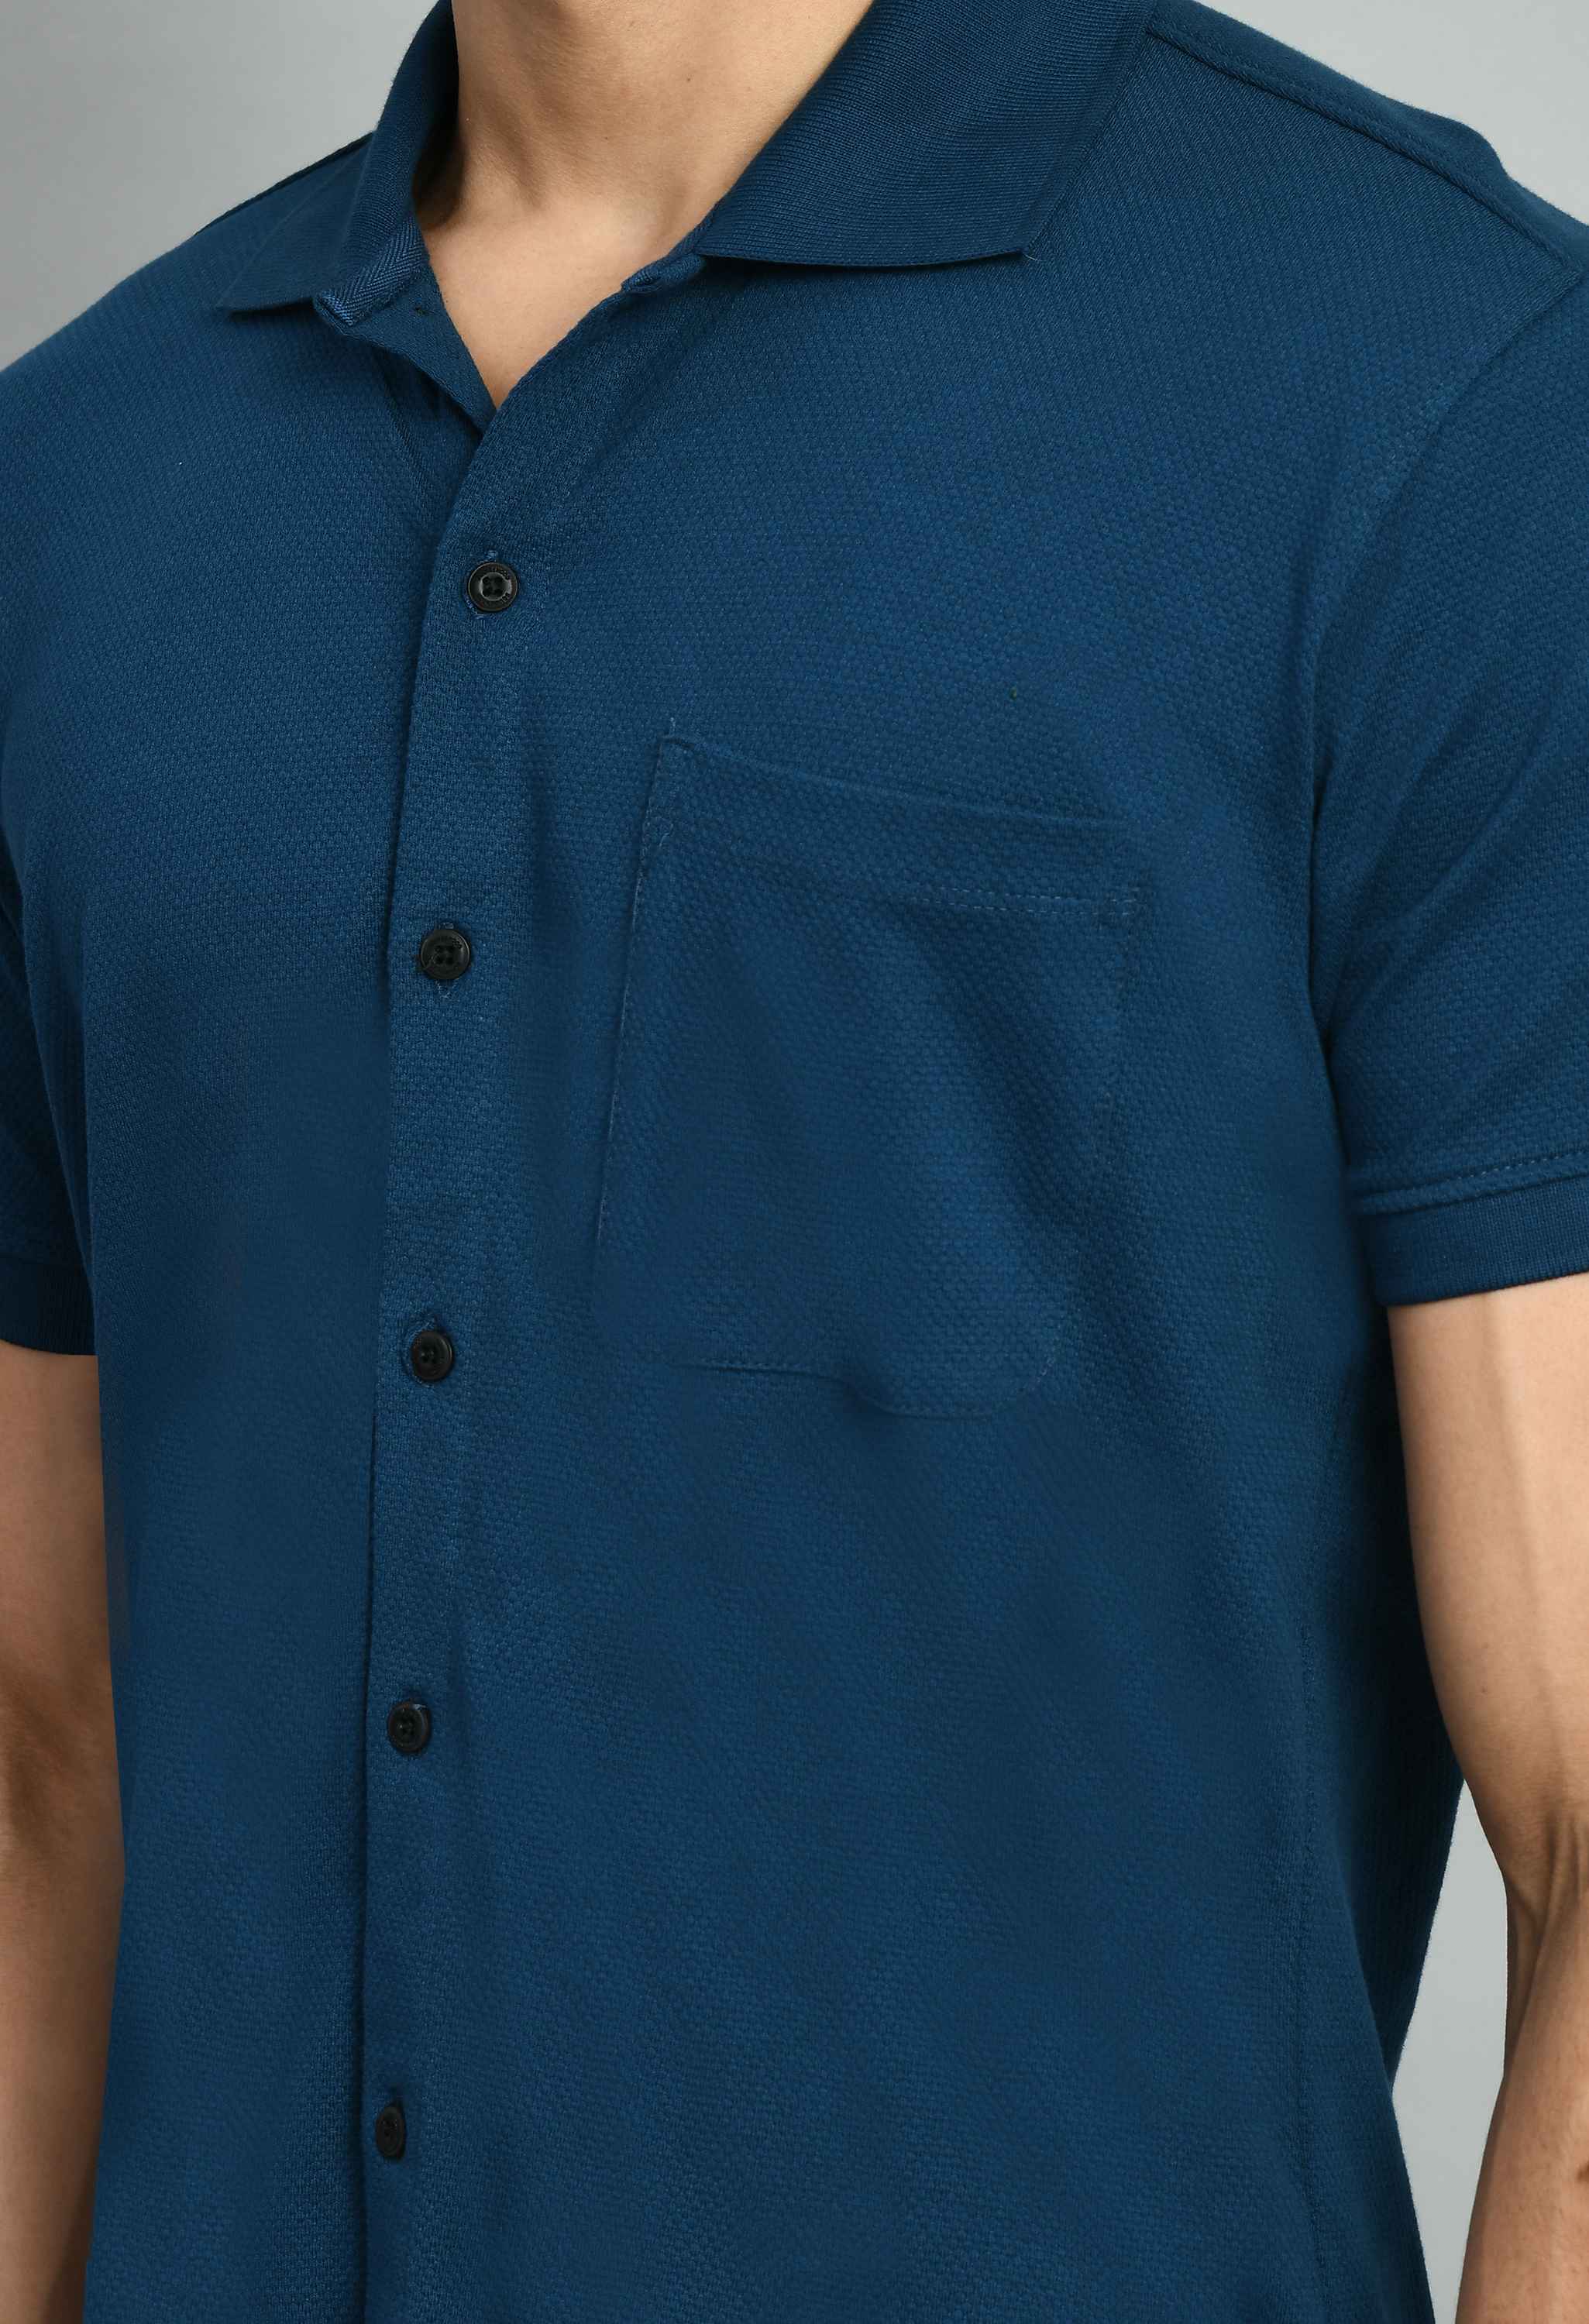 Men's Tint Blue Solid Casual Shirt